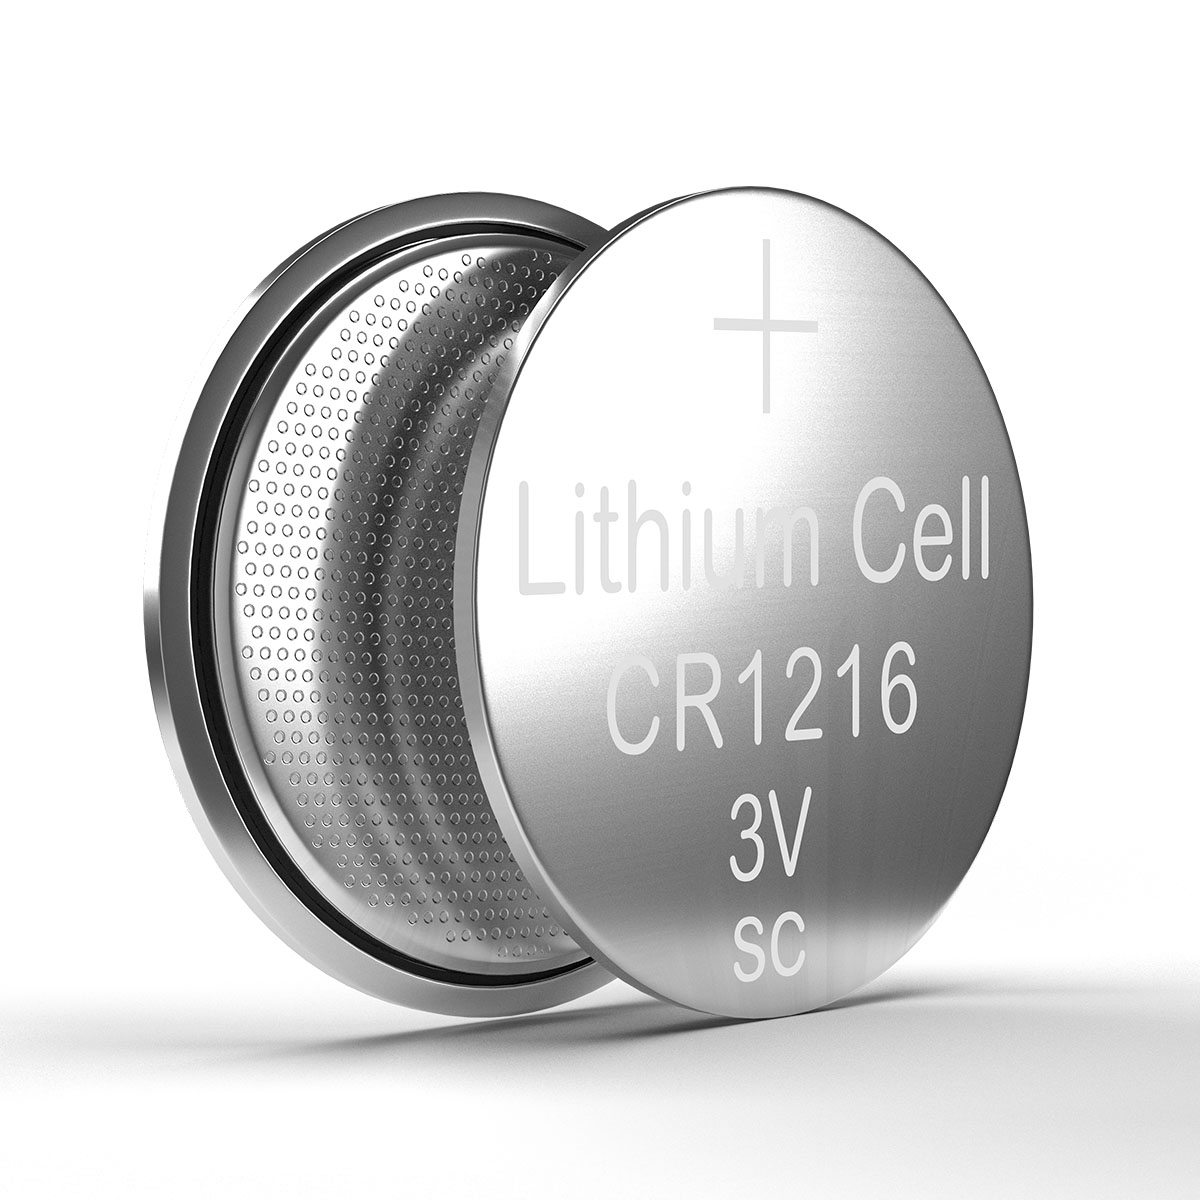 Toshiba CR2032 Lithium Coin Cell Battery 3v, Tear Strip